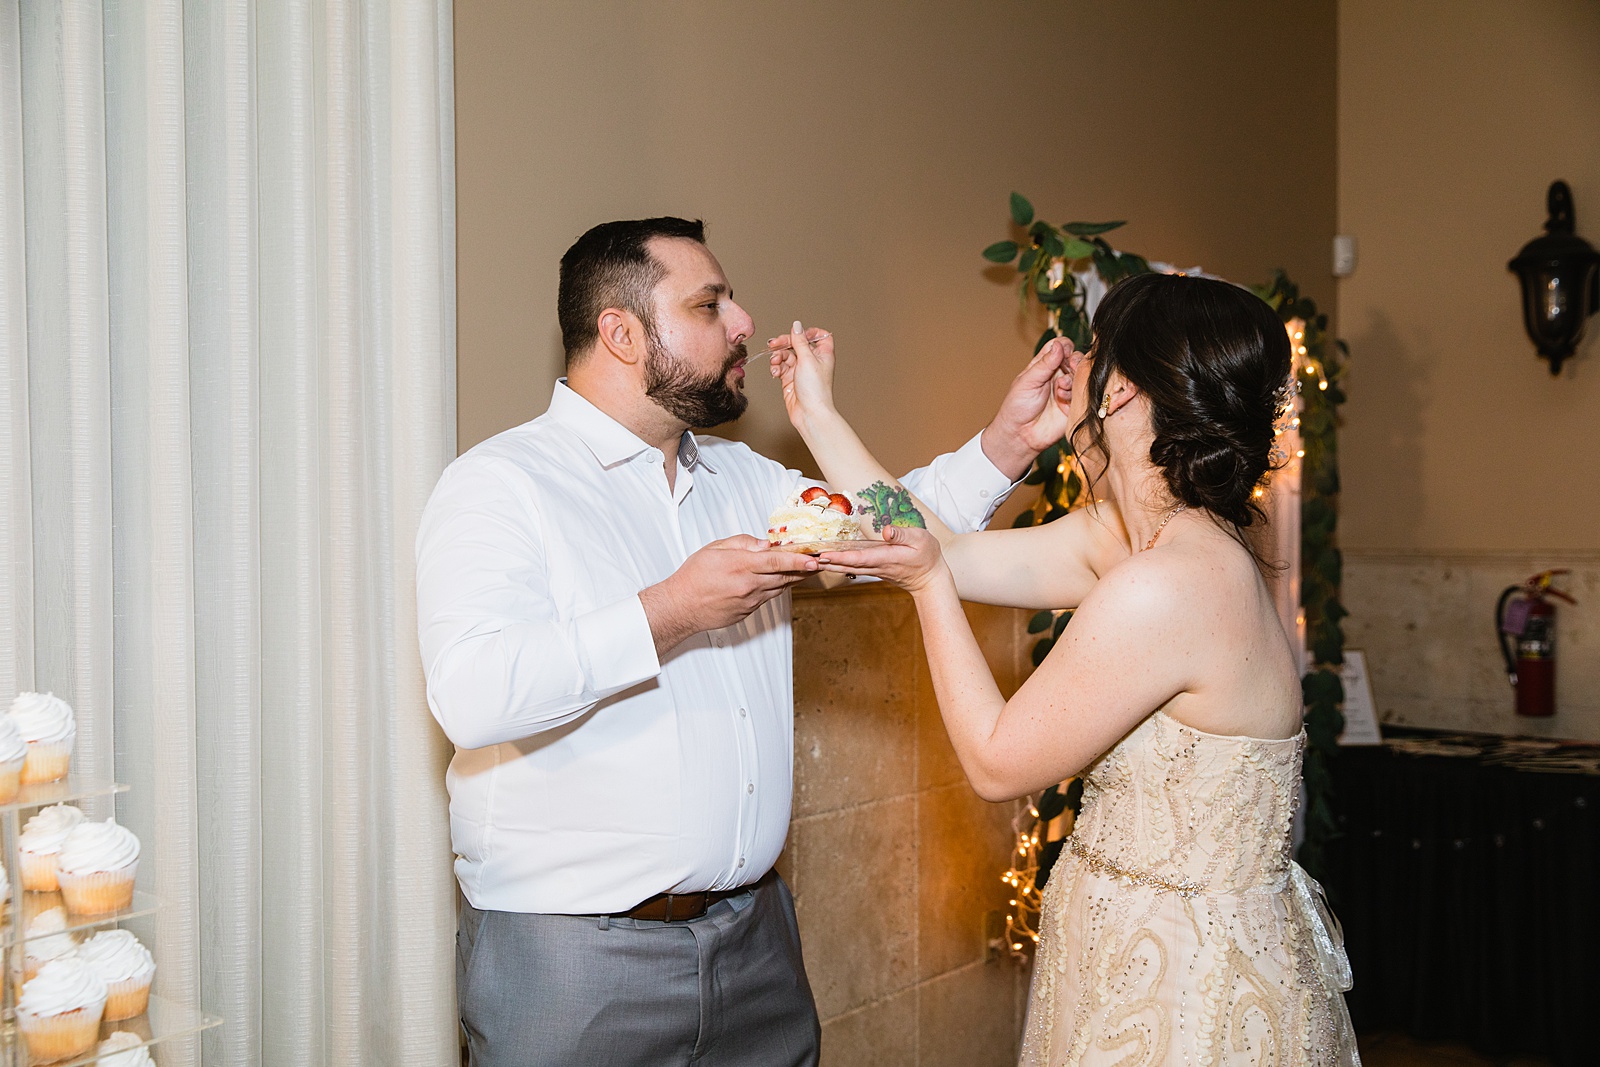 Bride and Groom cutting their wedding cake at their Bella Rose Estate wedding reception by Arizona wedding photographer PMA Photography.